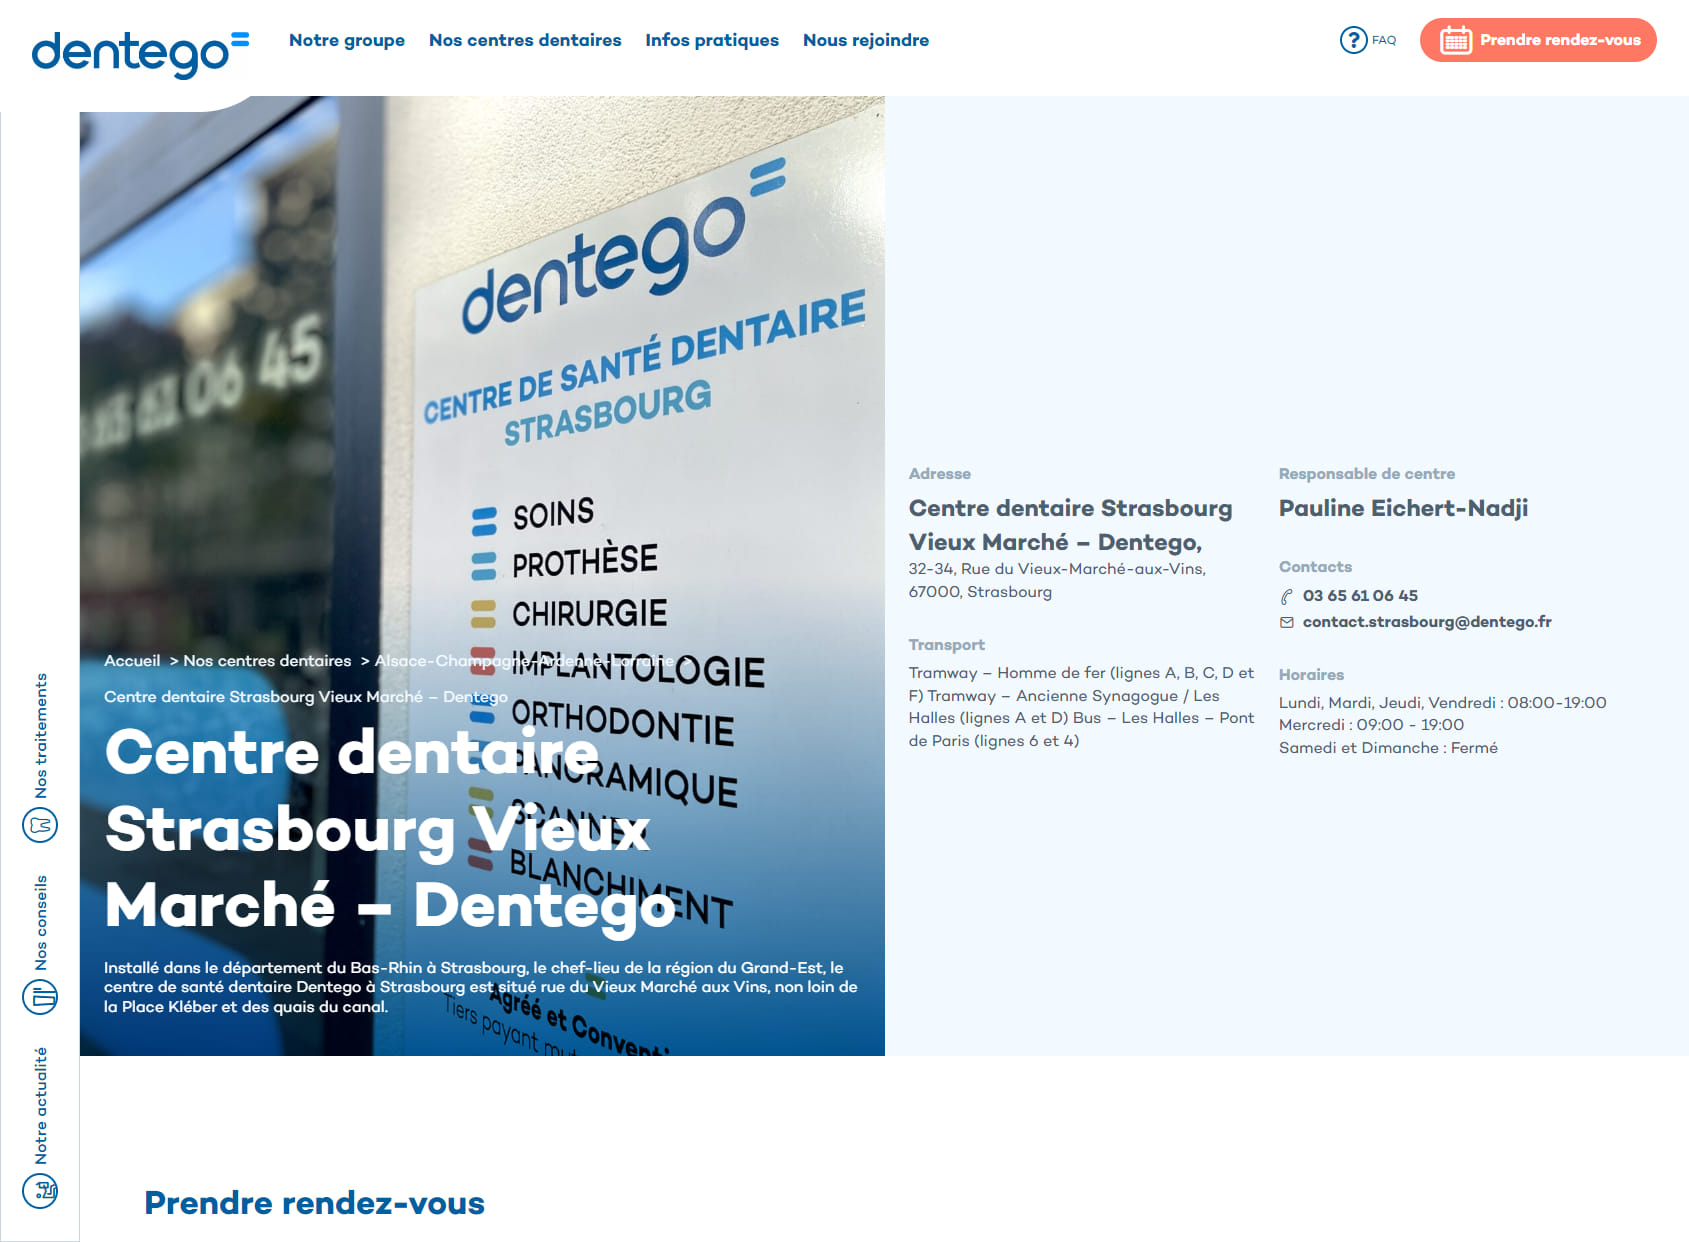 Centre dentaire Strasbourg Vieux Marché - Dentego